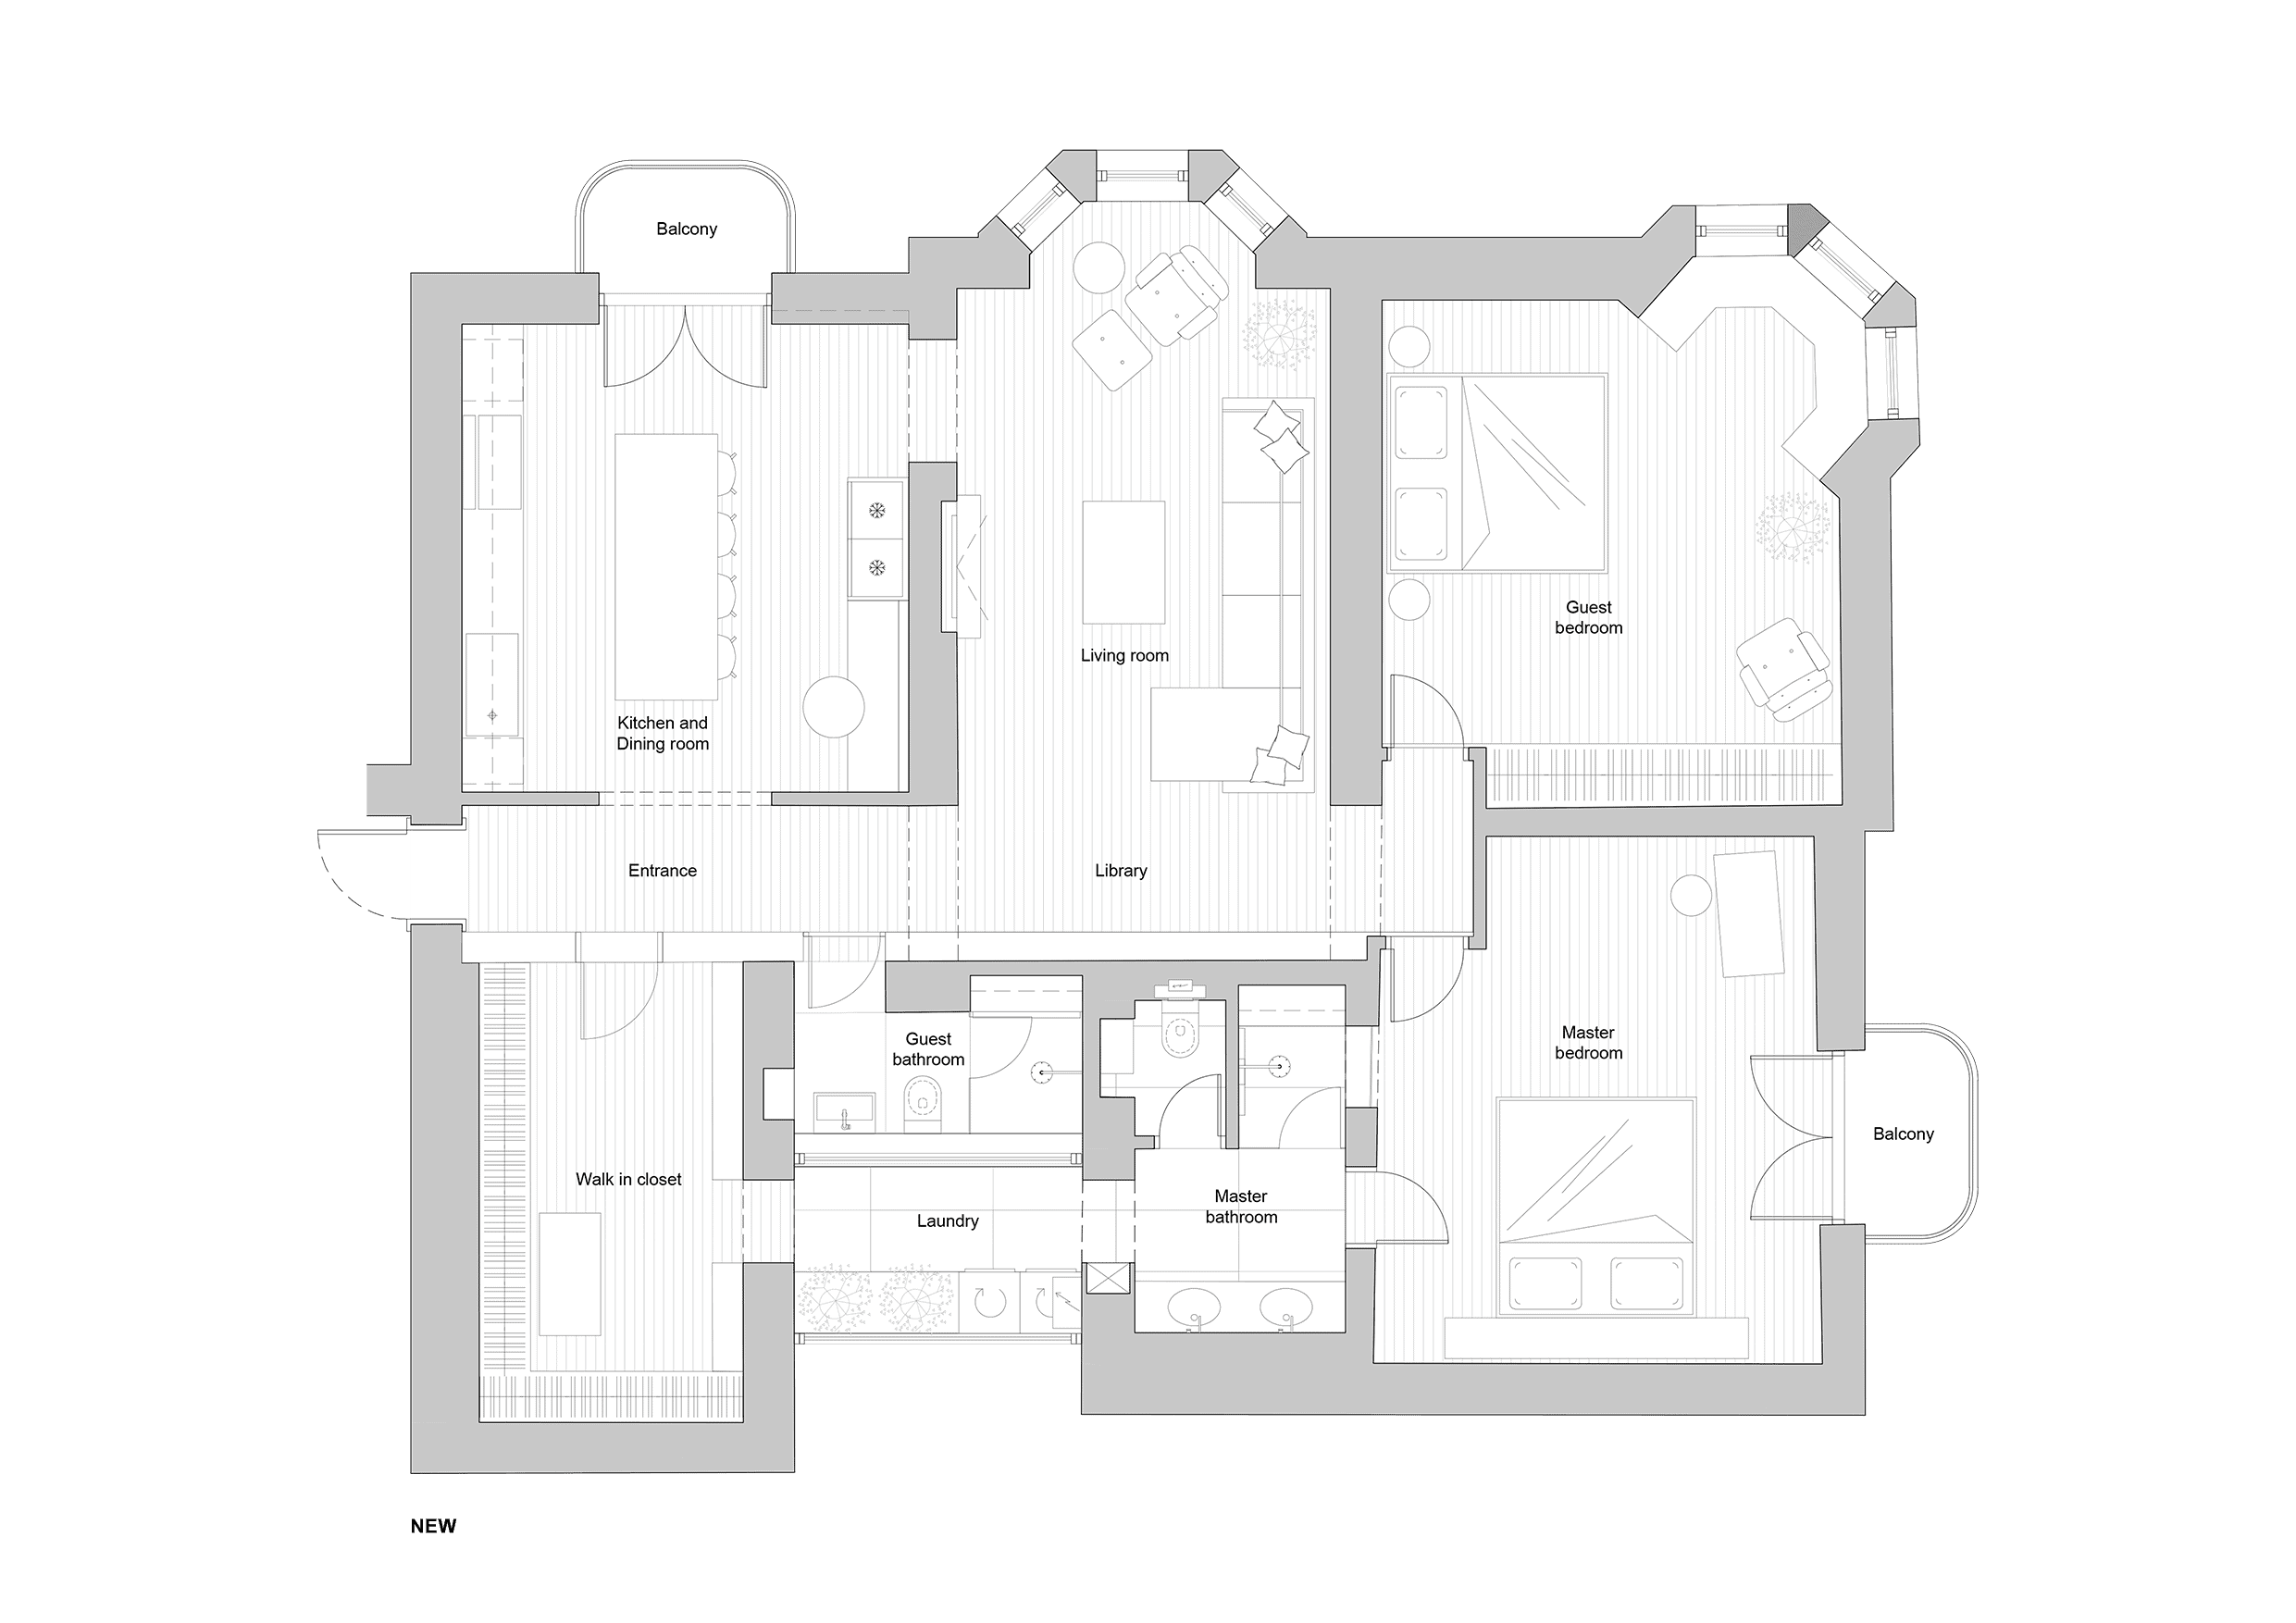 bj-apartment-floor-plan-new-1